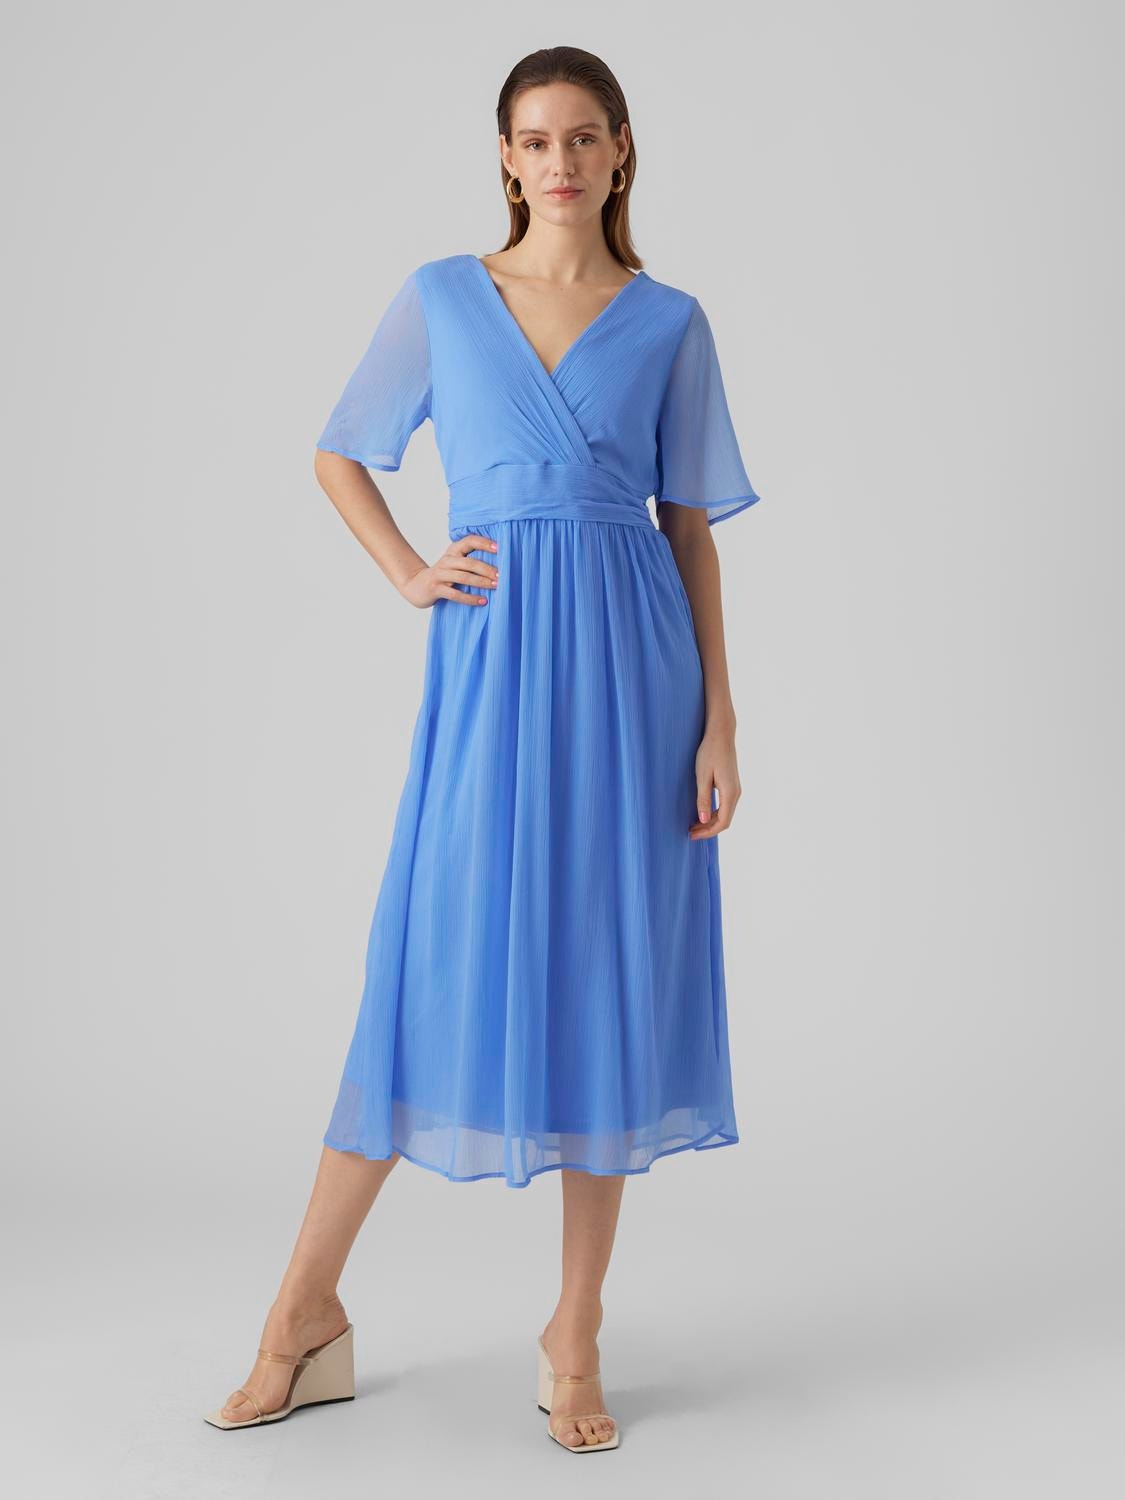 Dapper Uitdaging de wind is sterk lange jurk | Medium Blue | Vero Moda®